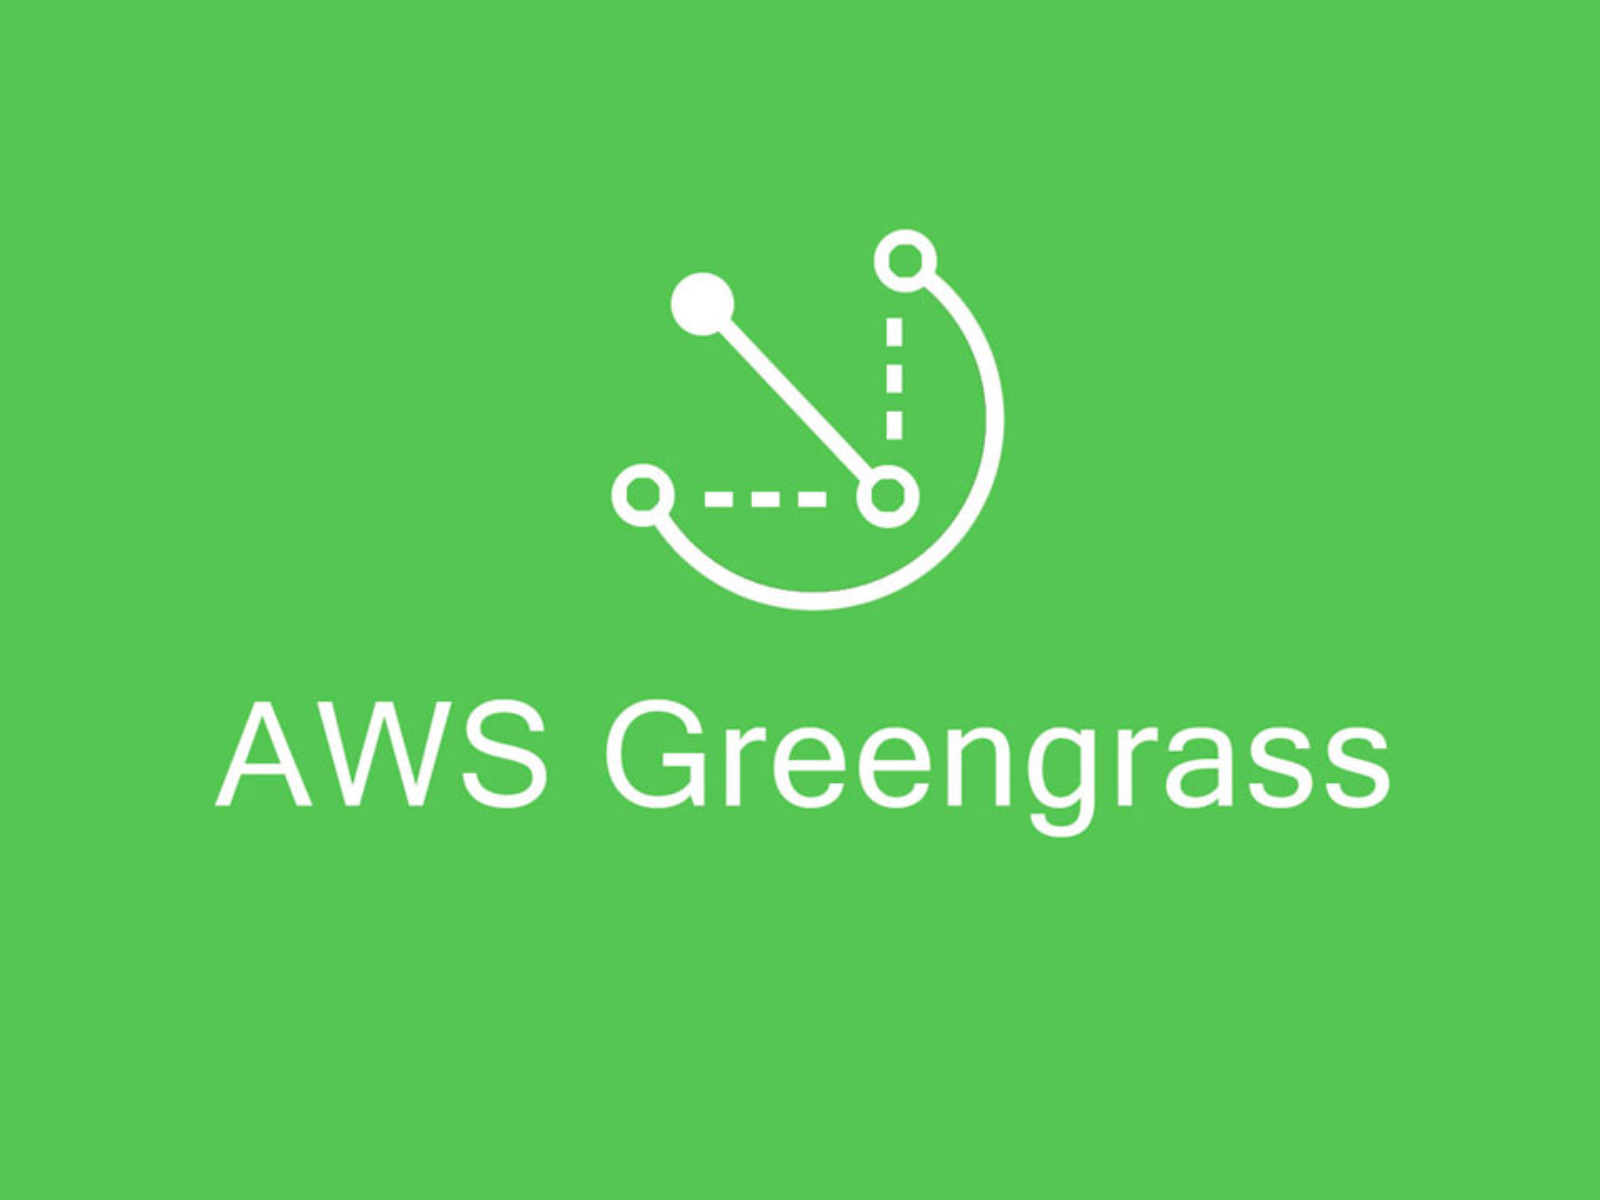 Cover of AWS greengrass IPC.